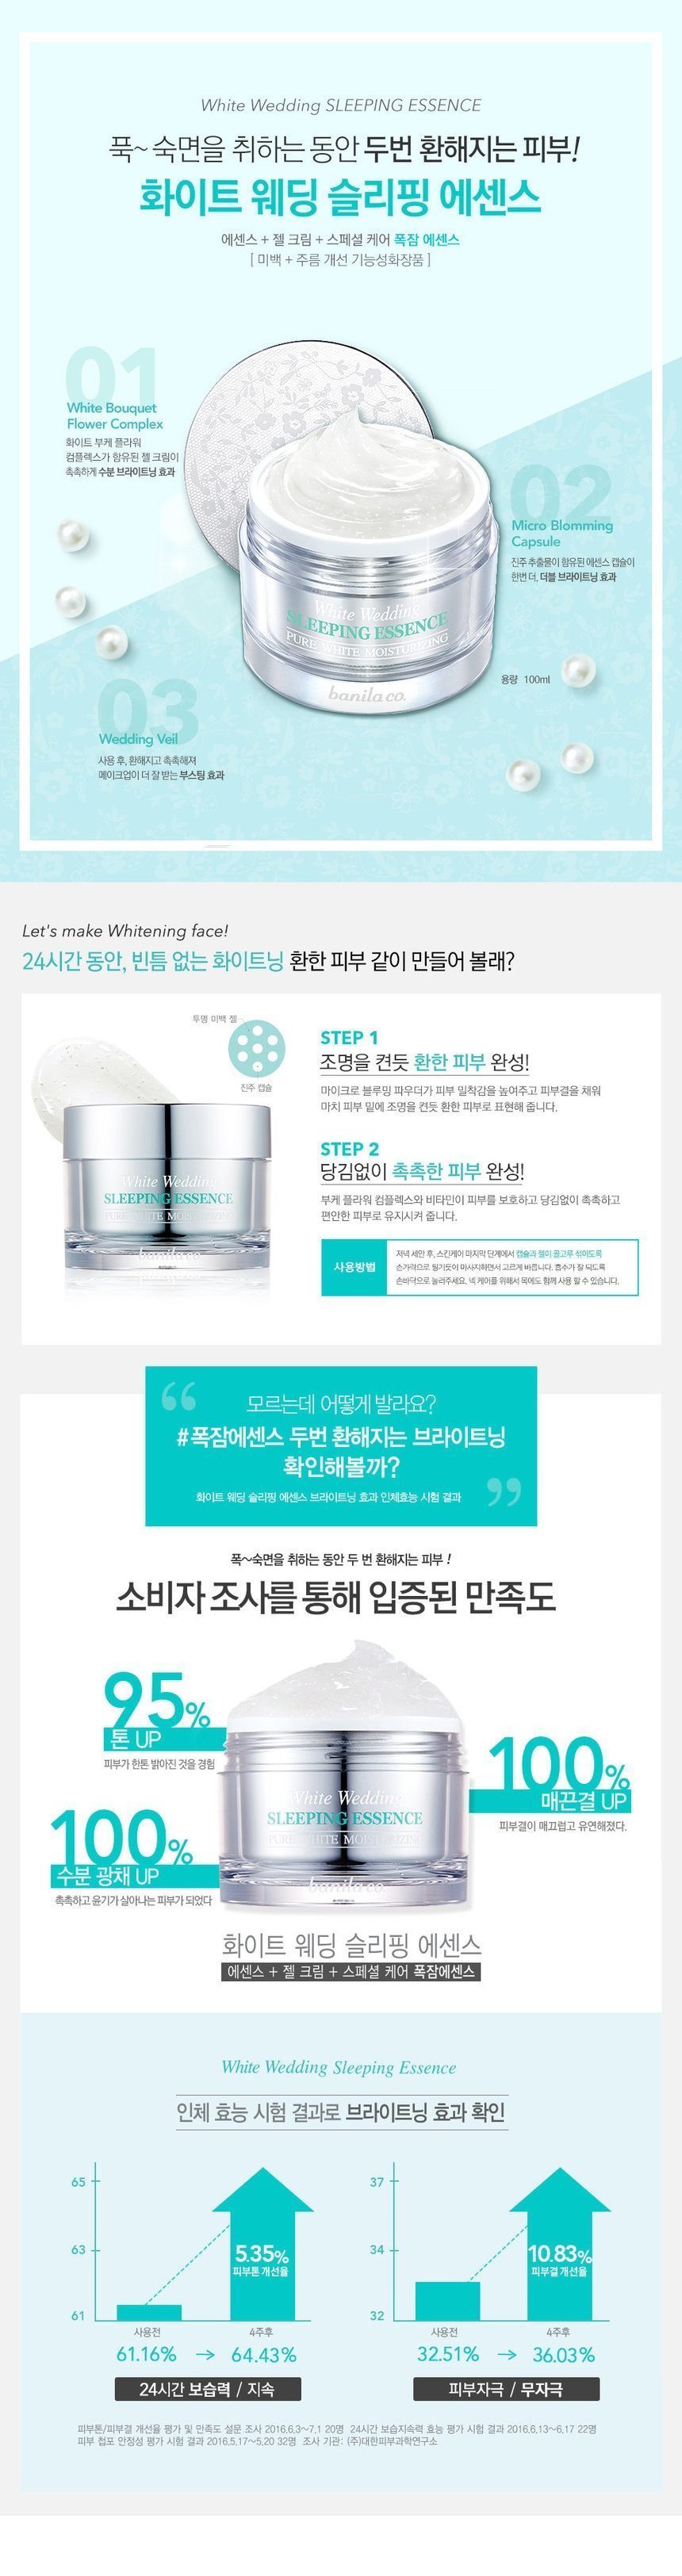 Banila Co White Wedding Sleeping Essence korean cosmetic skincare product online shop malaysia macau singapore1